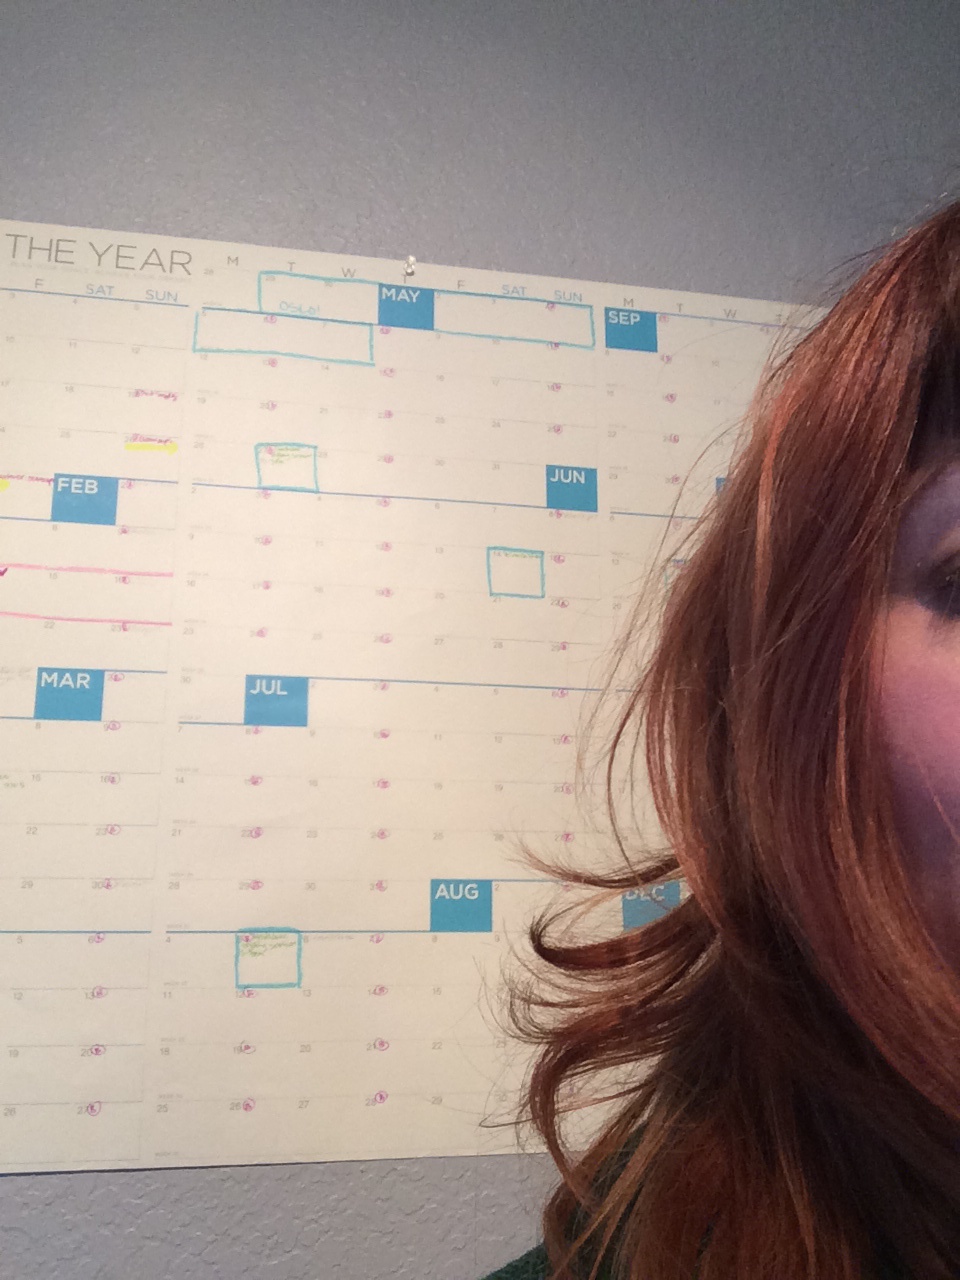  Me and my calendar of dreams.  